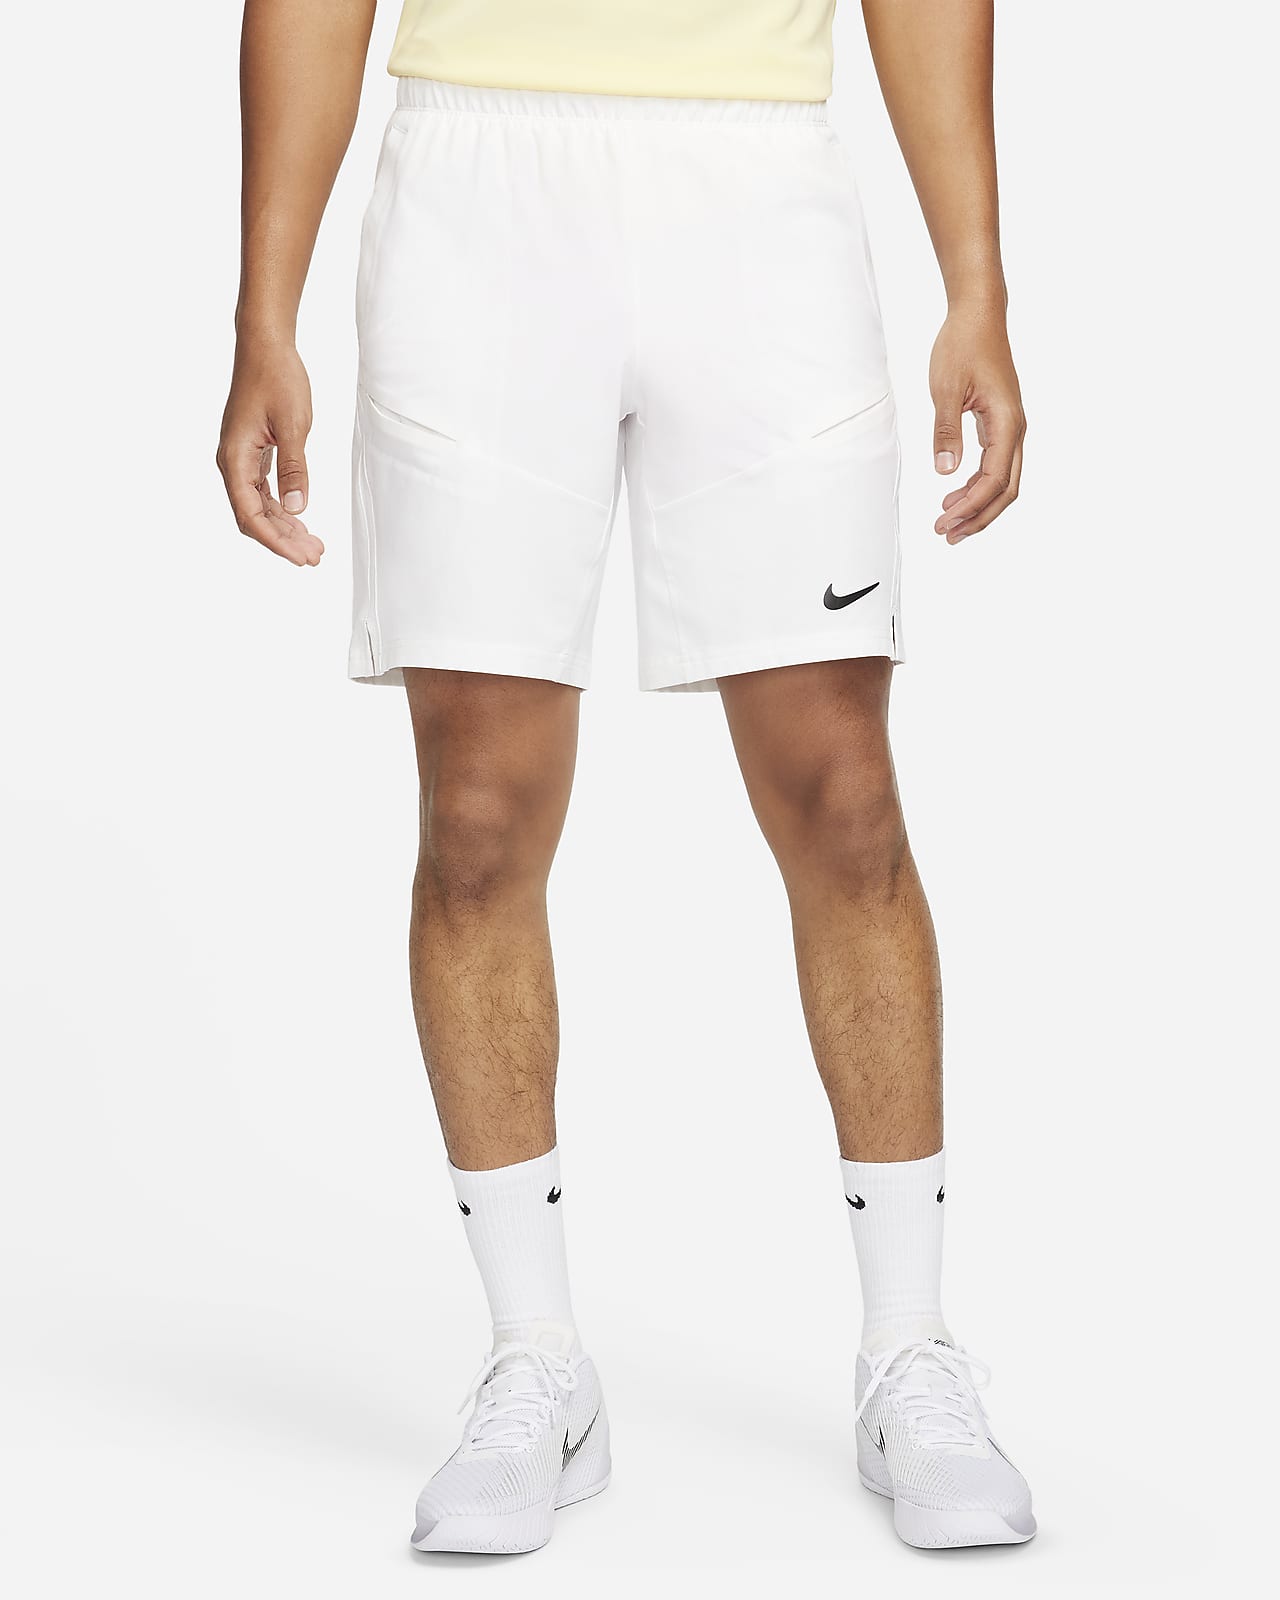 NikeCourt Advantage Men's 9" Tennis Shorts